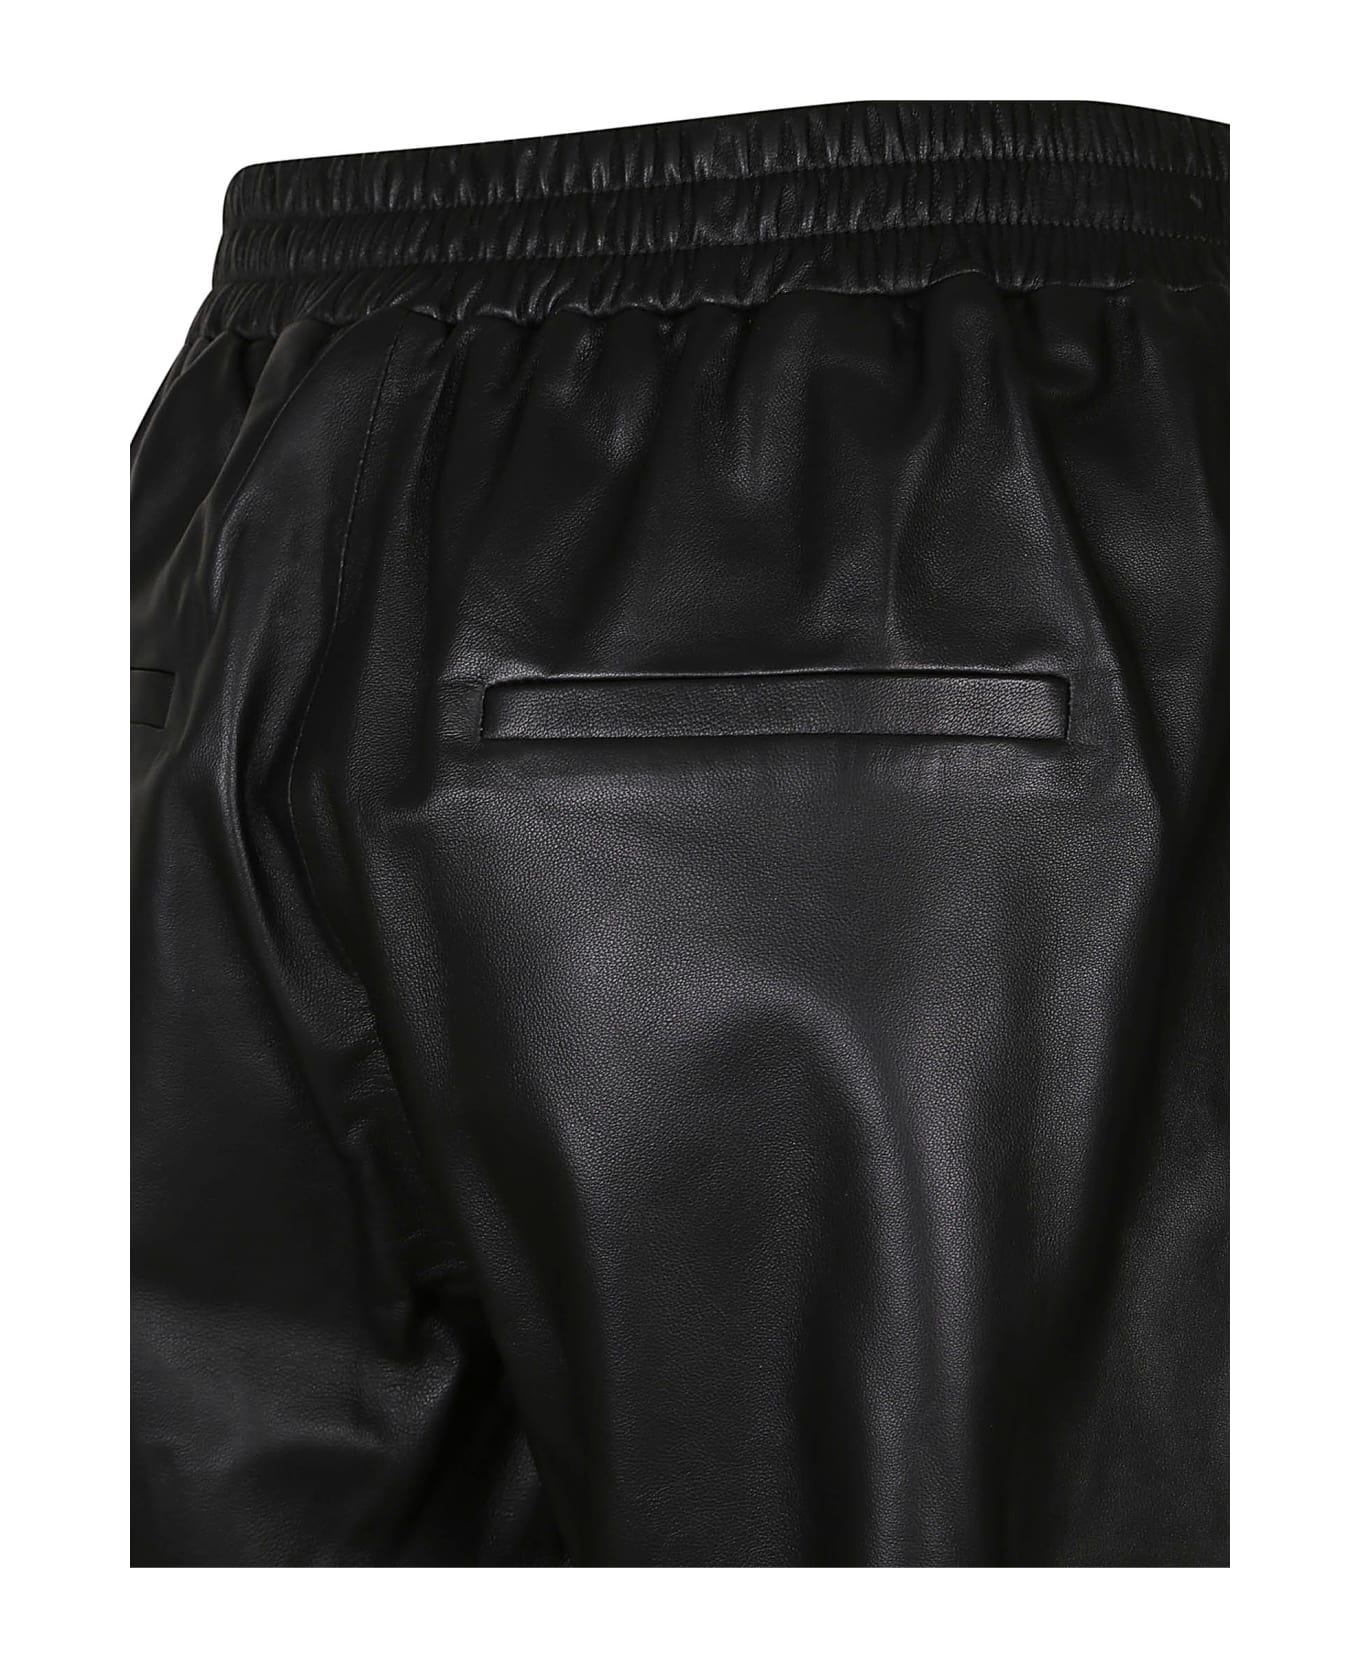 ARMA Trousers Black - Black ボトムス